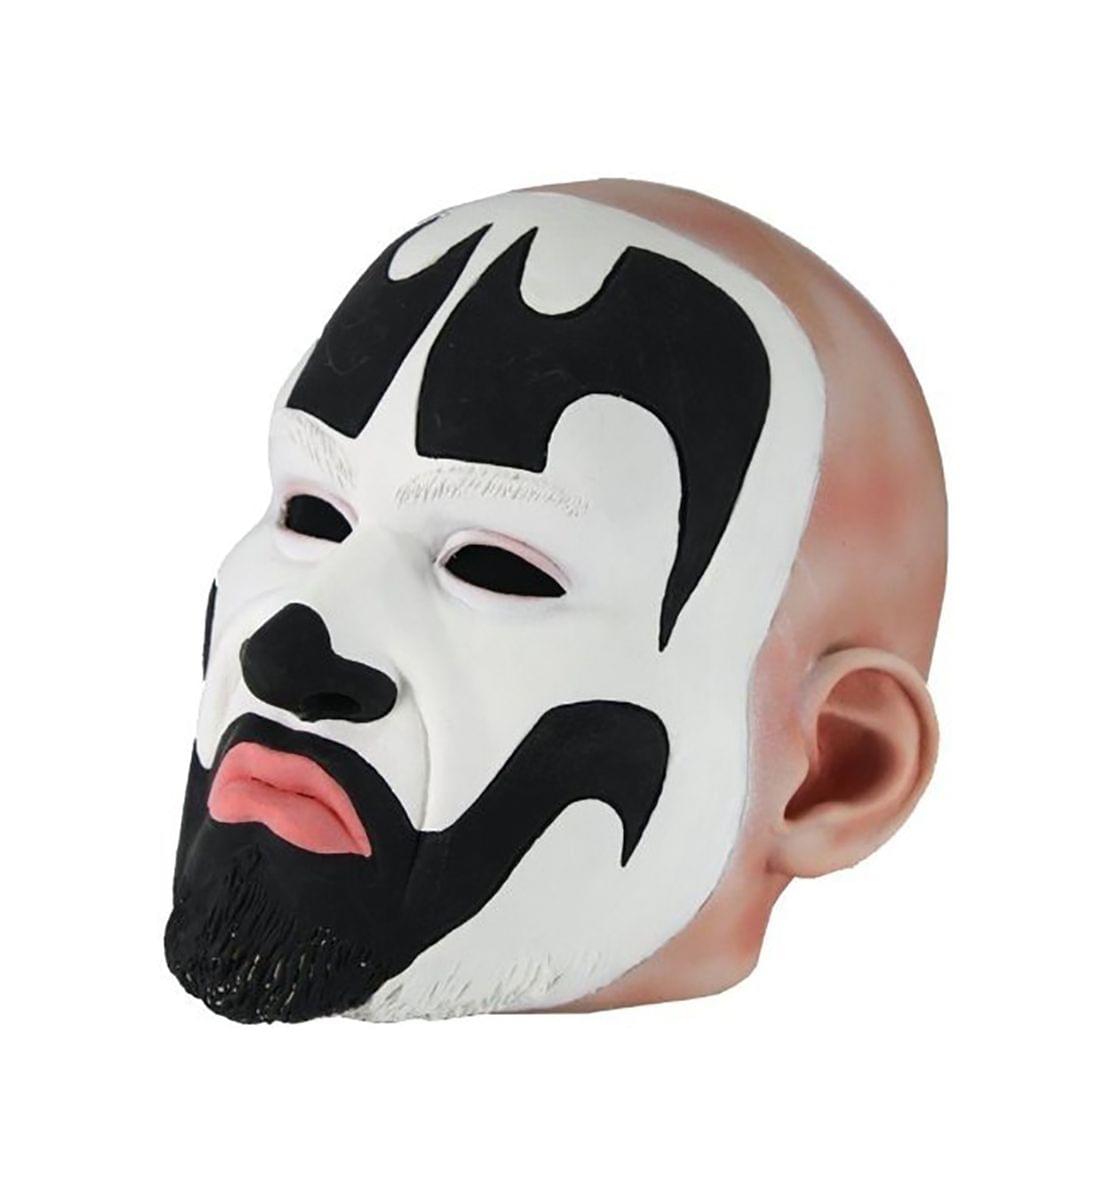 ICP Insane Clown Posse Shaggy 2 Dope Adult Latex Costume Mask